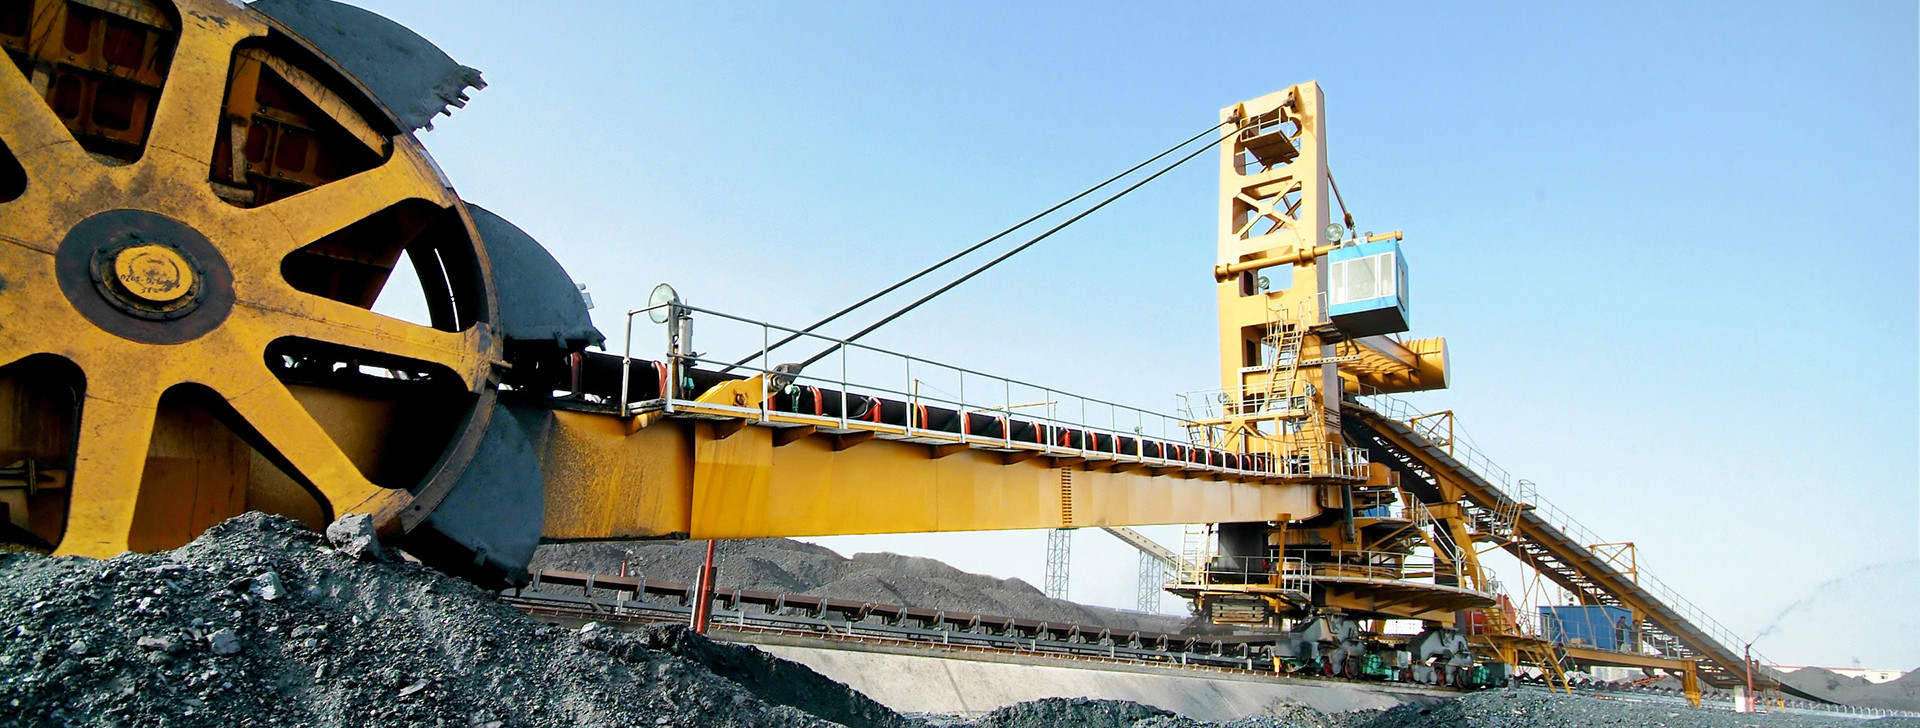 Heavy mining equipment.jpg